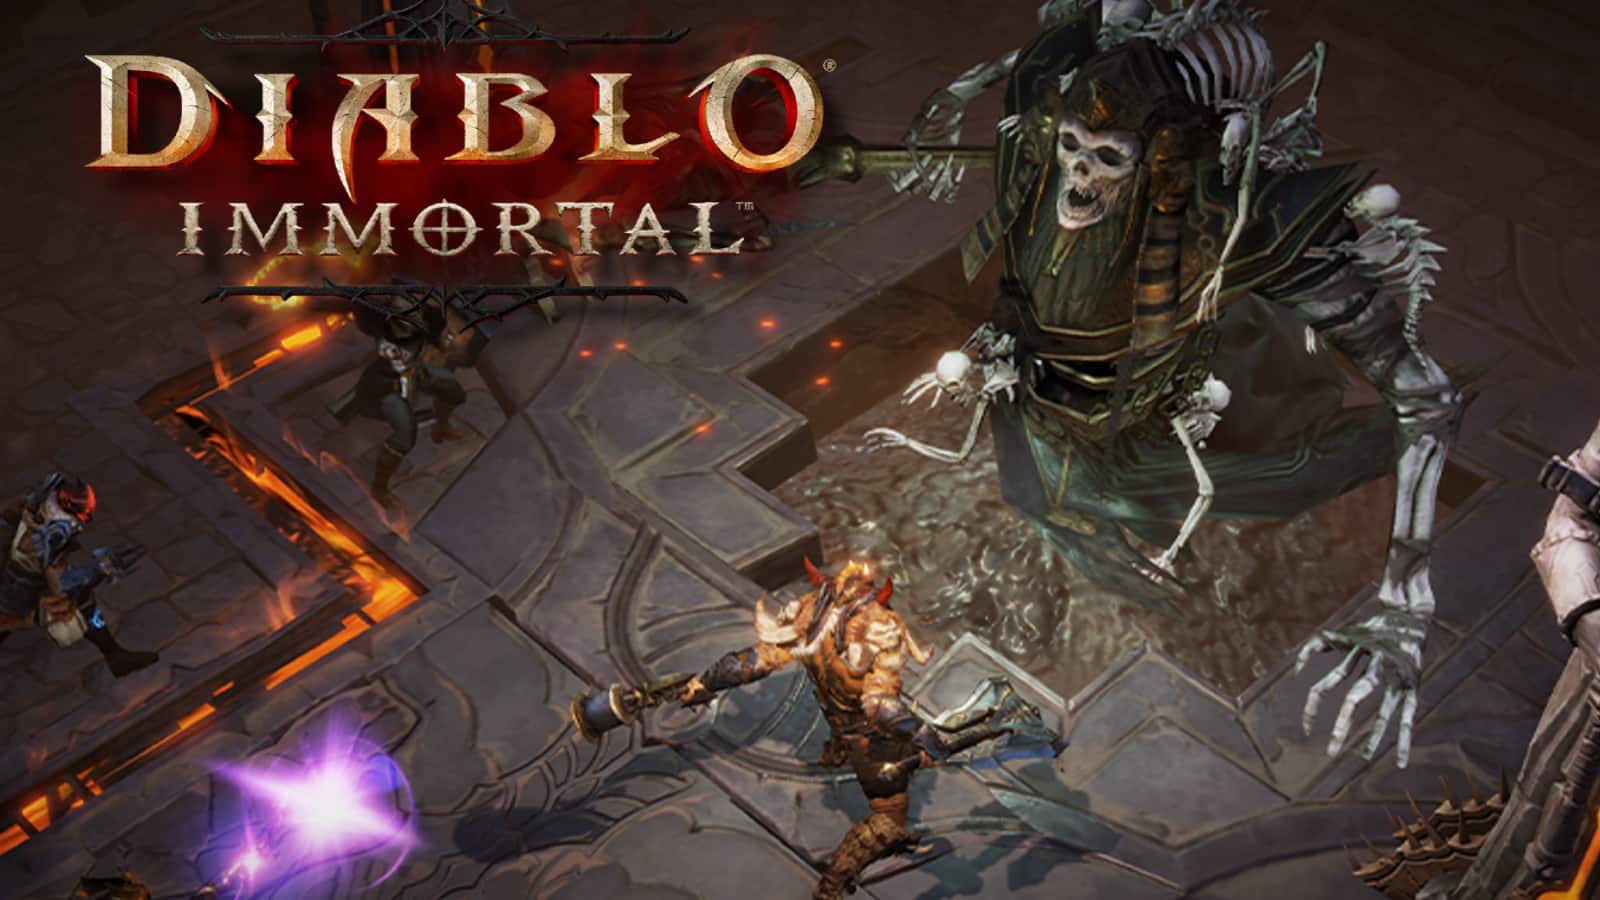 gameplay of Diablo Immortal